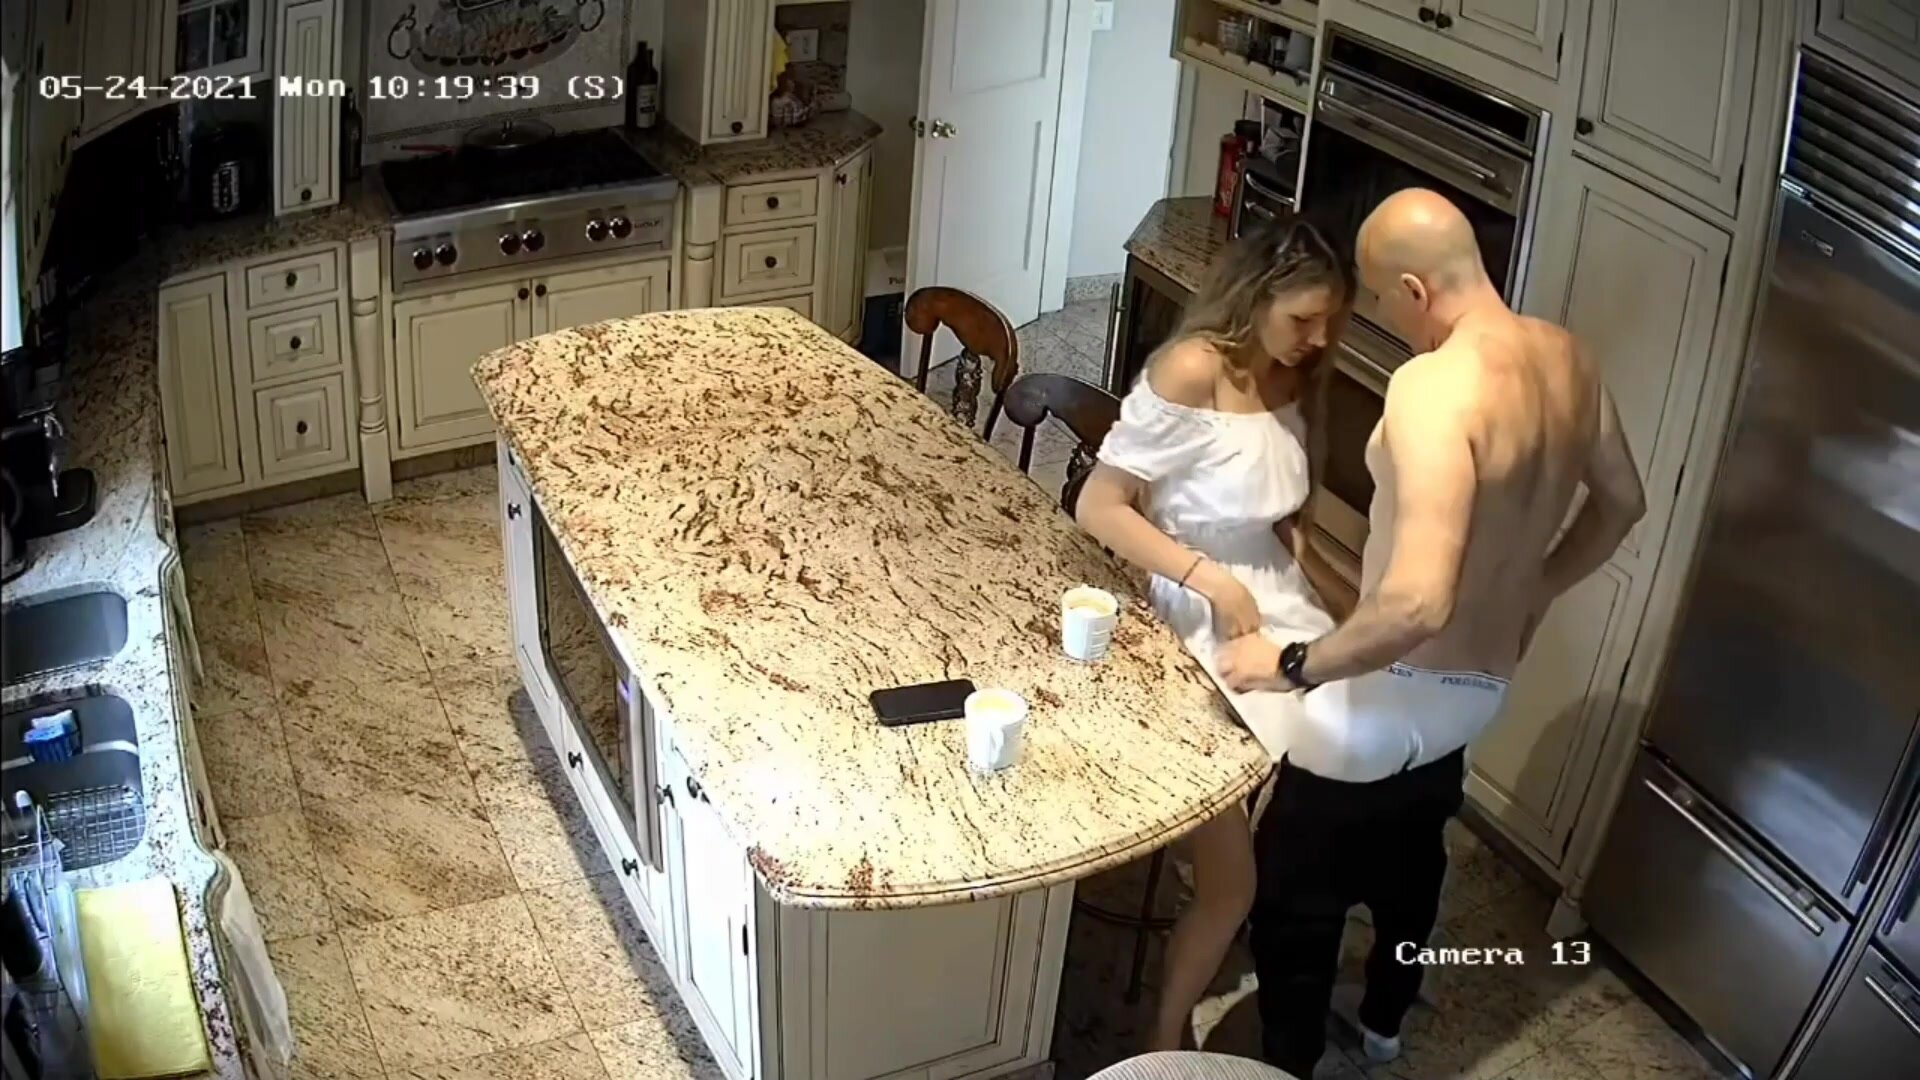 Vamp female partner caught shagging with the neighbor on hidden camera installed photo